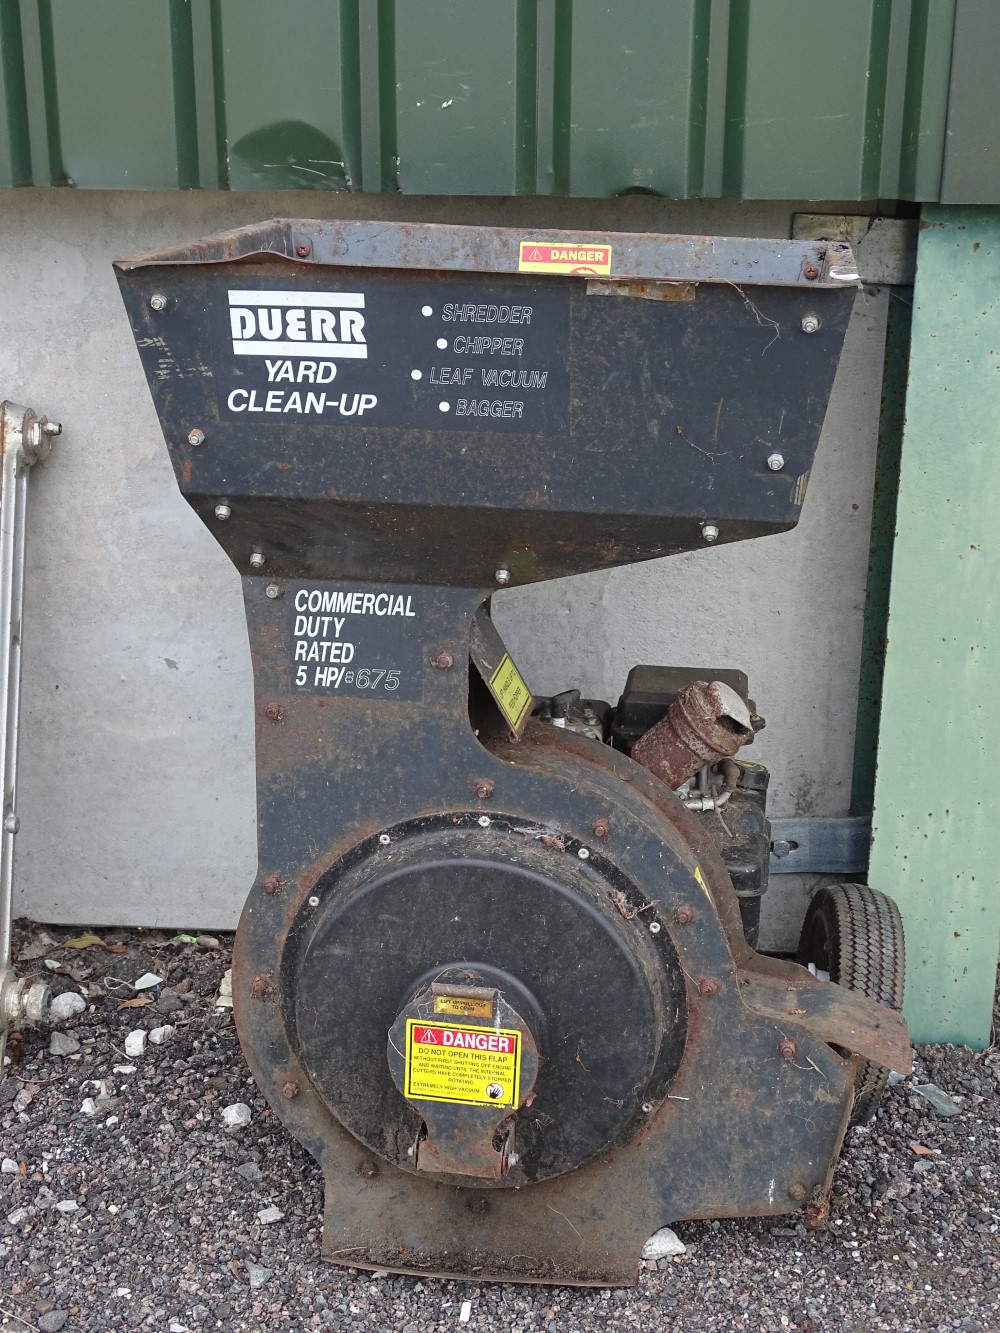 A Duerr yard clean-up machine, combined shredder, chipper,